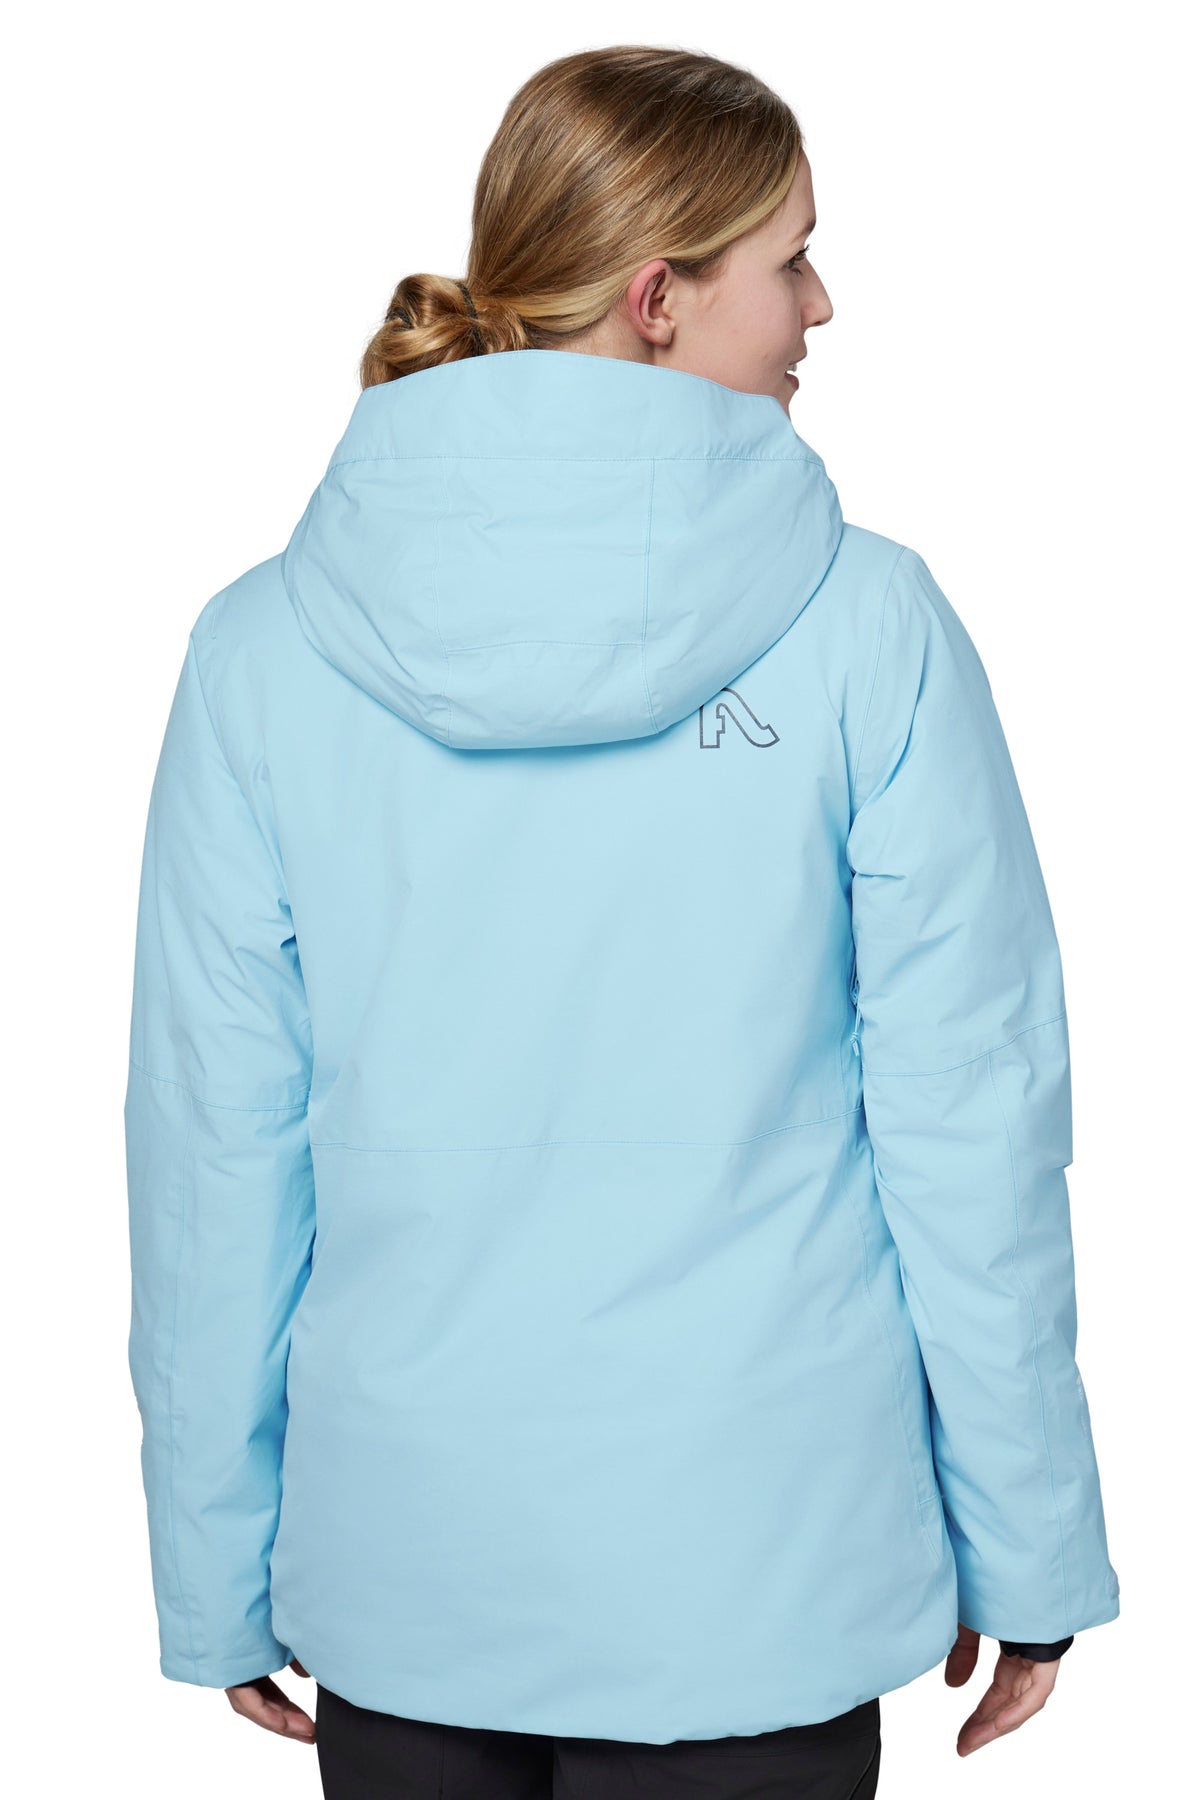 Avery Jacket - Women's Shell Ski Jacket | Flylow – Flylow Gear